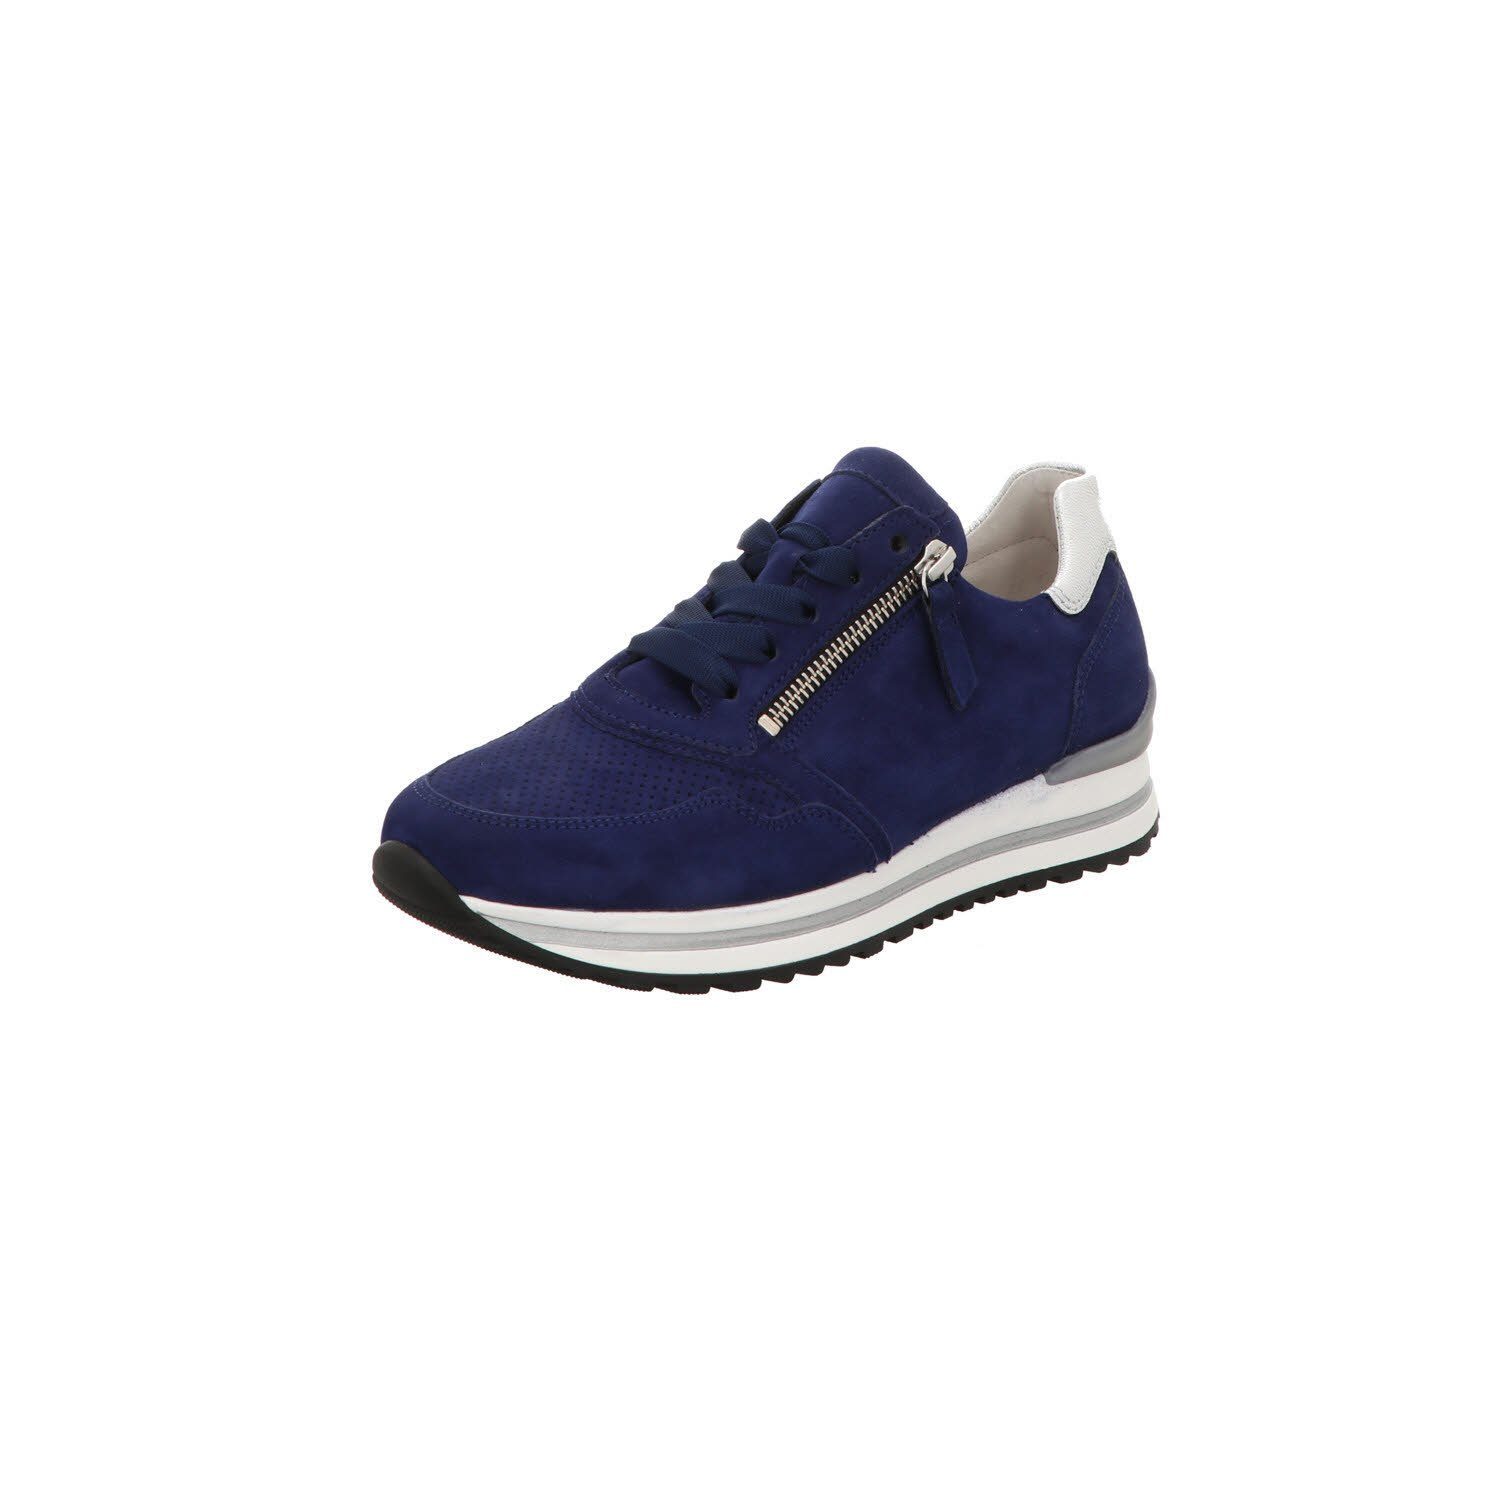 (oceano/silber) Gabor Sneaker Blau